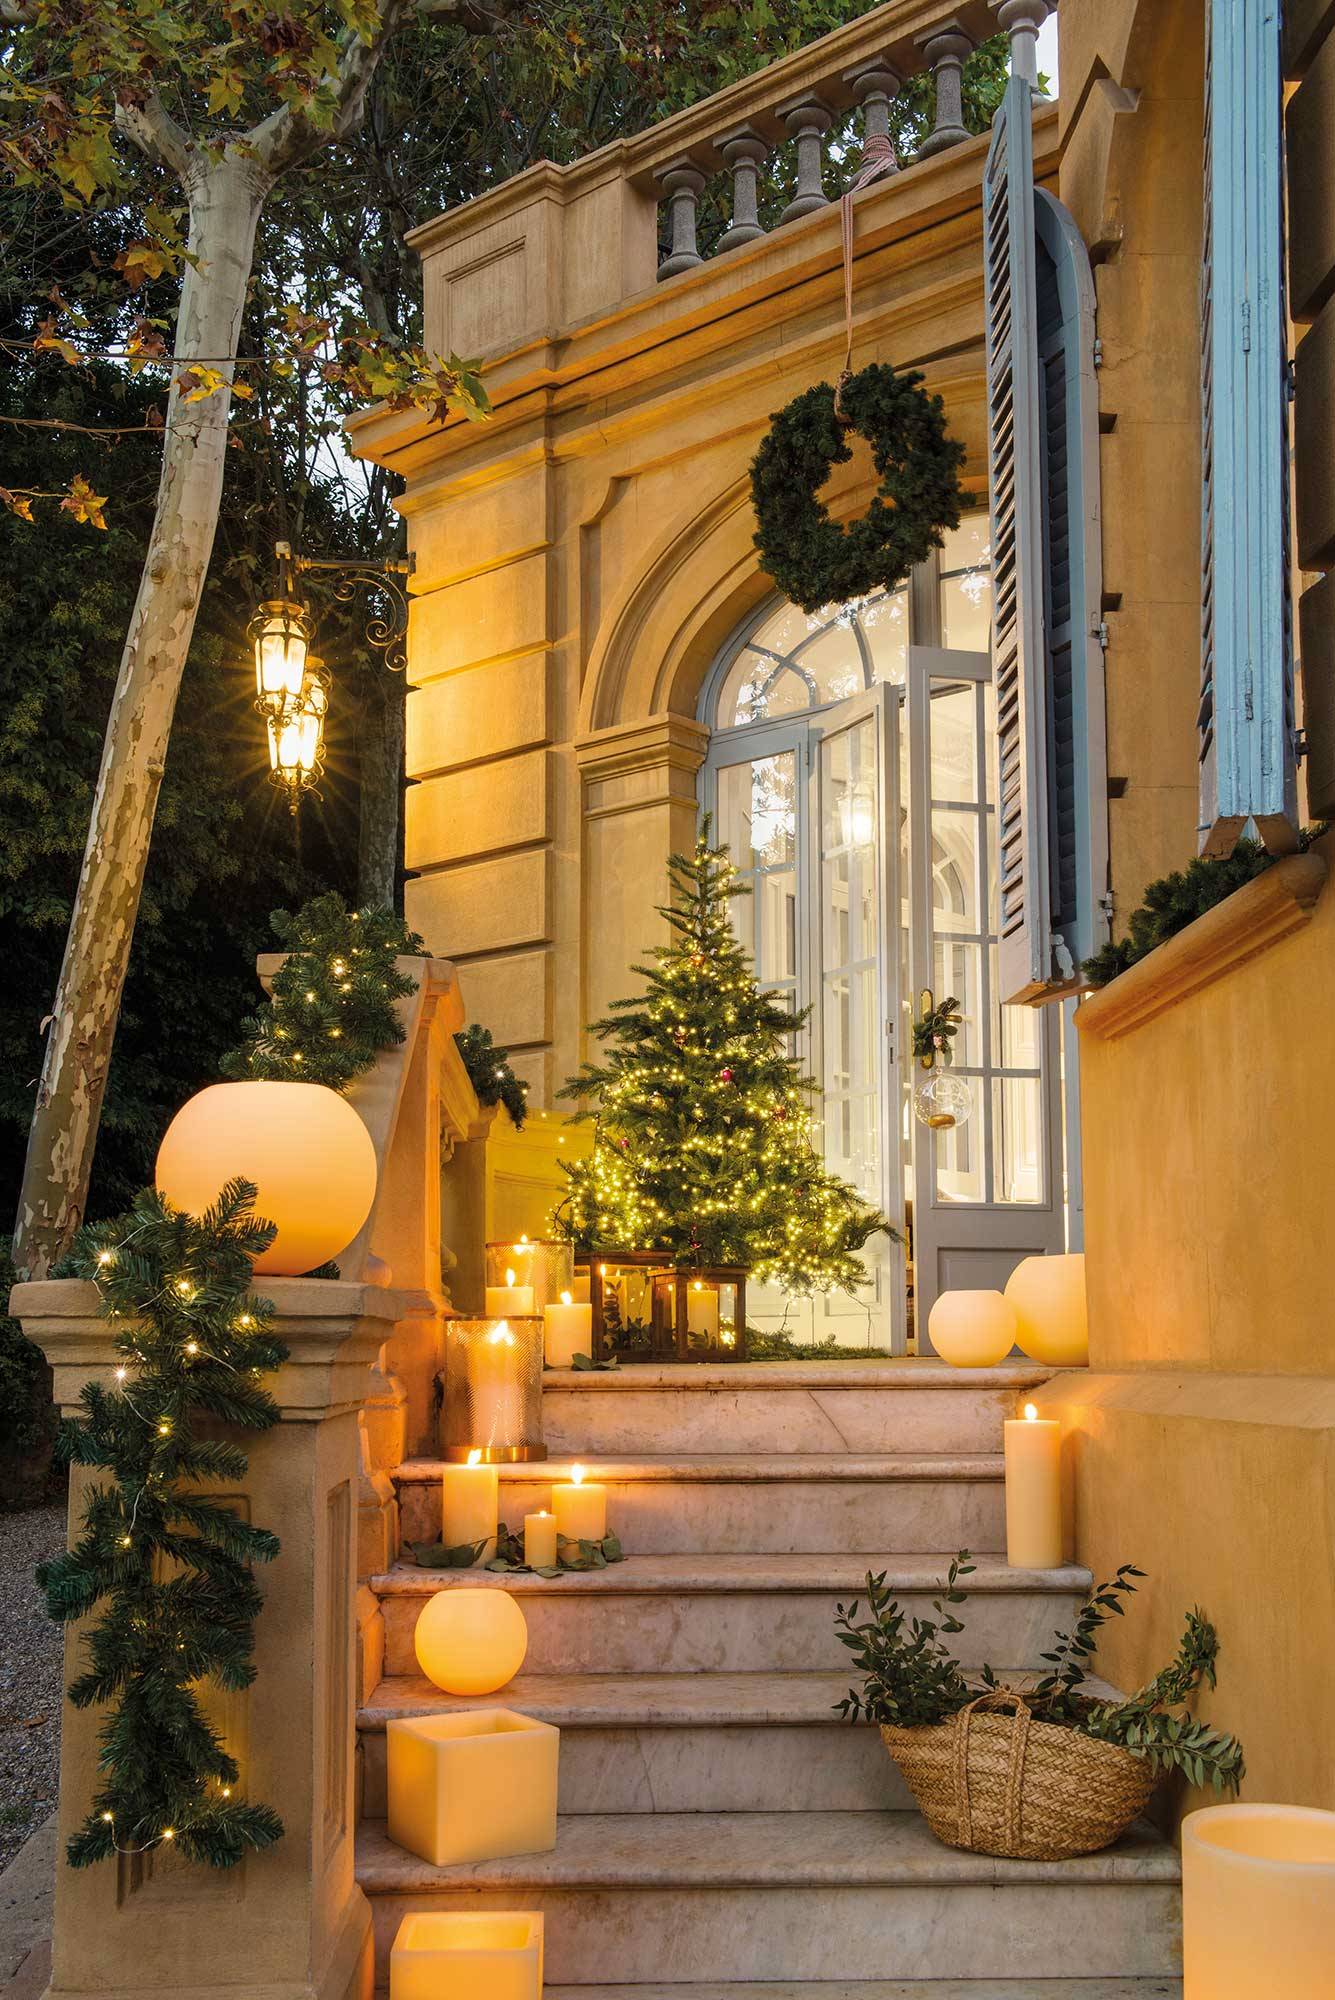 Exterior de casa modernista con escalera decorada de Navidad con velas_00495473